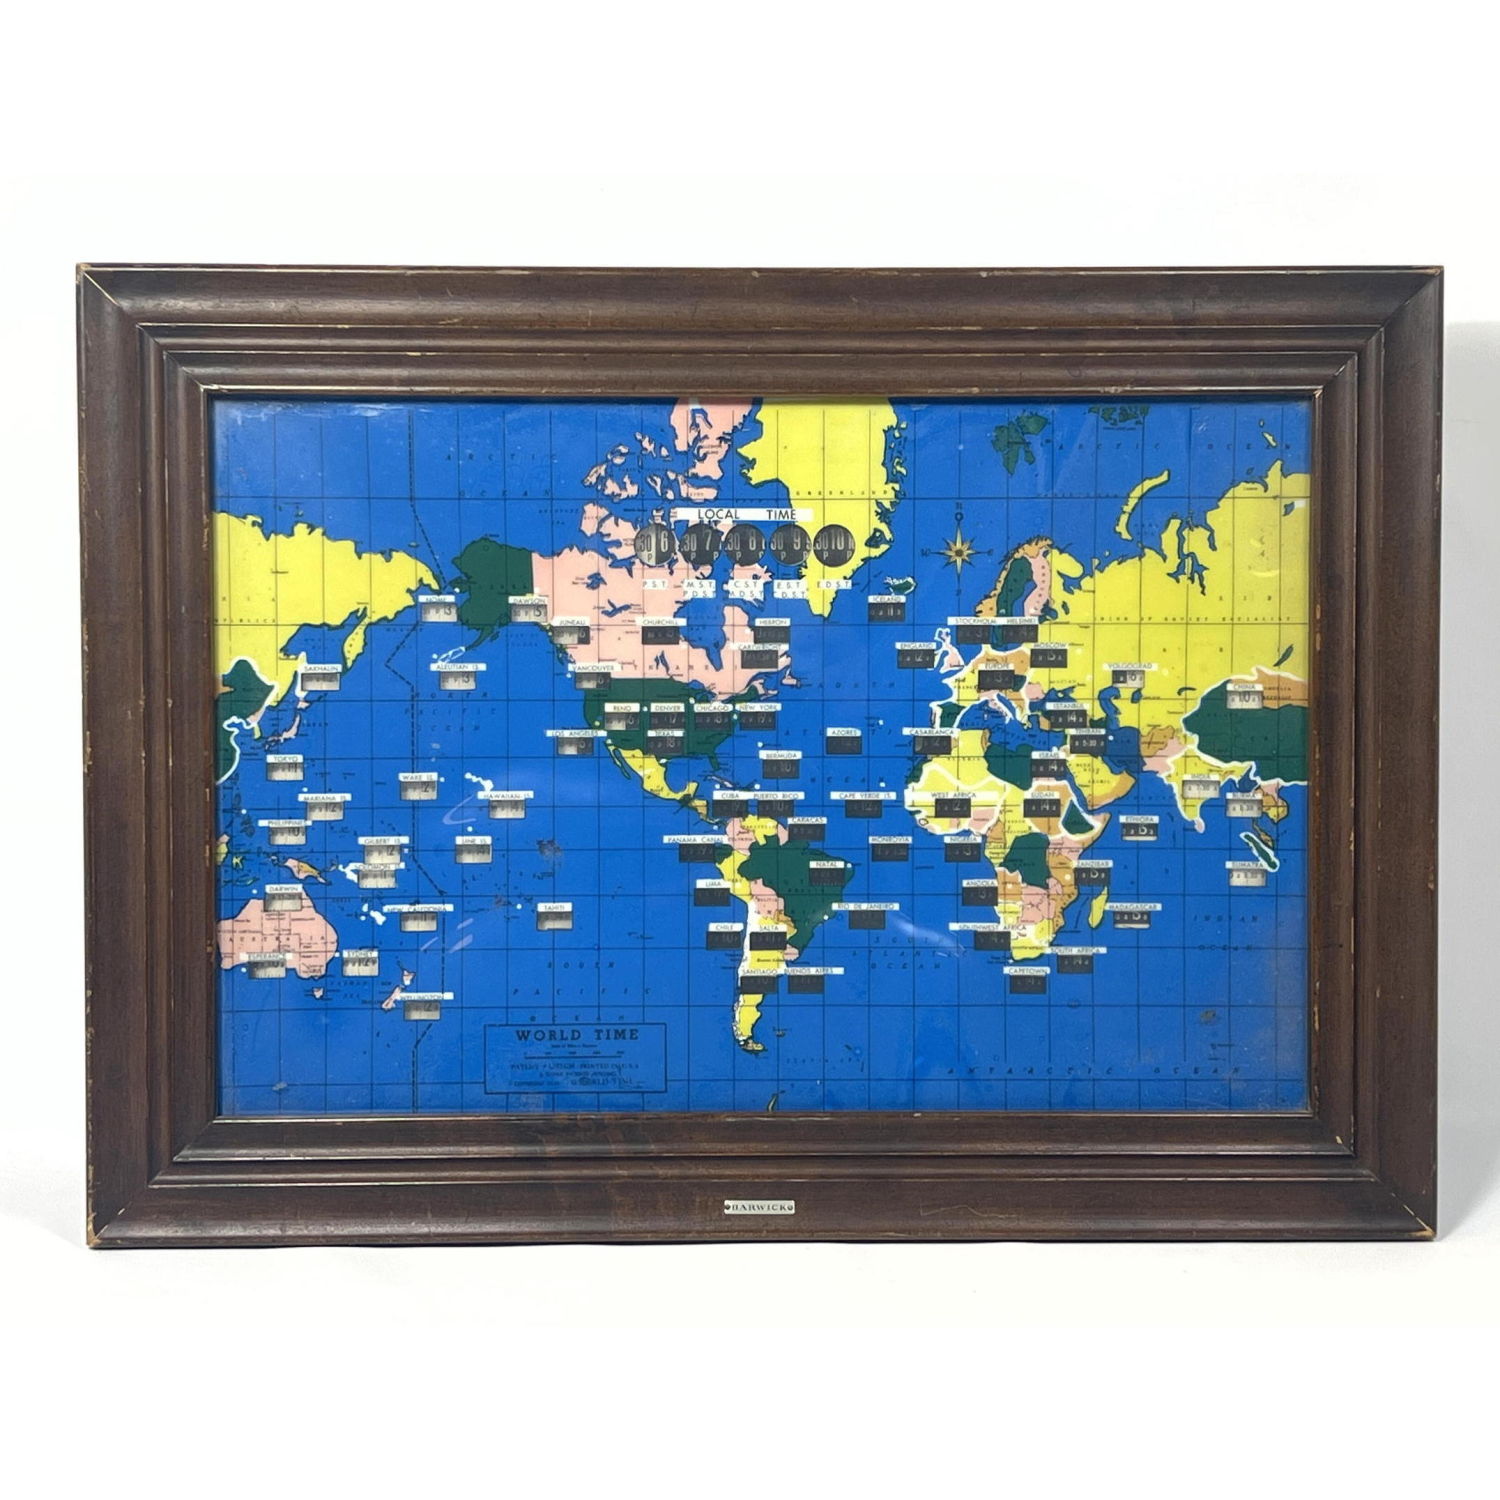 Howard Miller World Map time clock 2fe89a